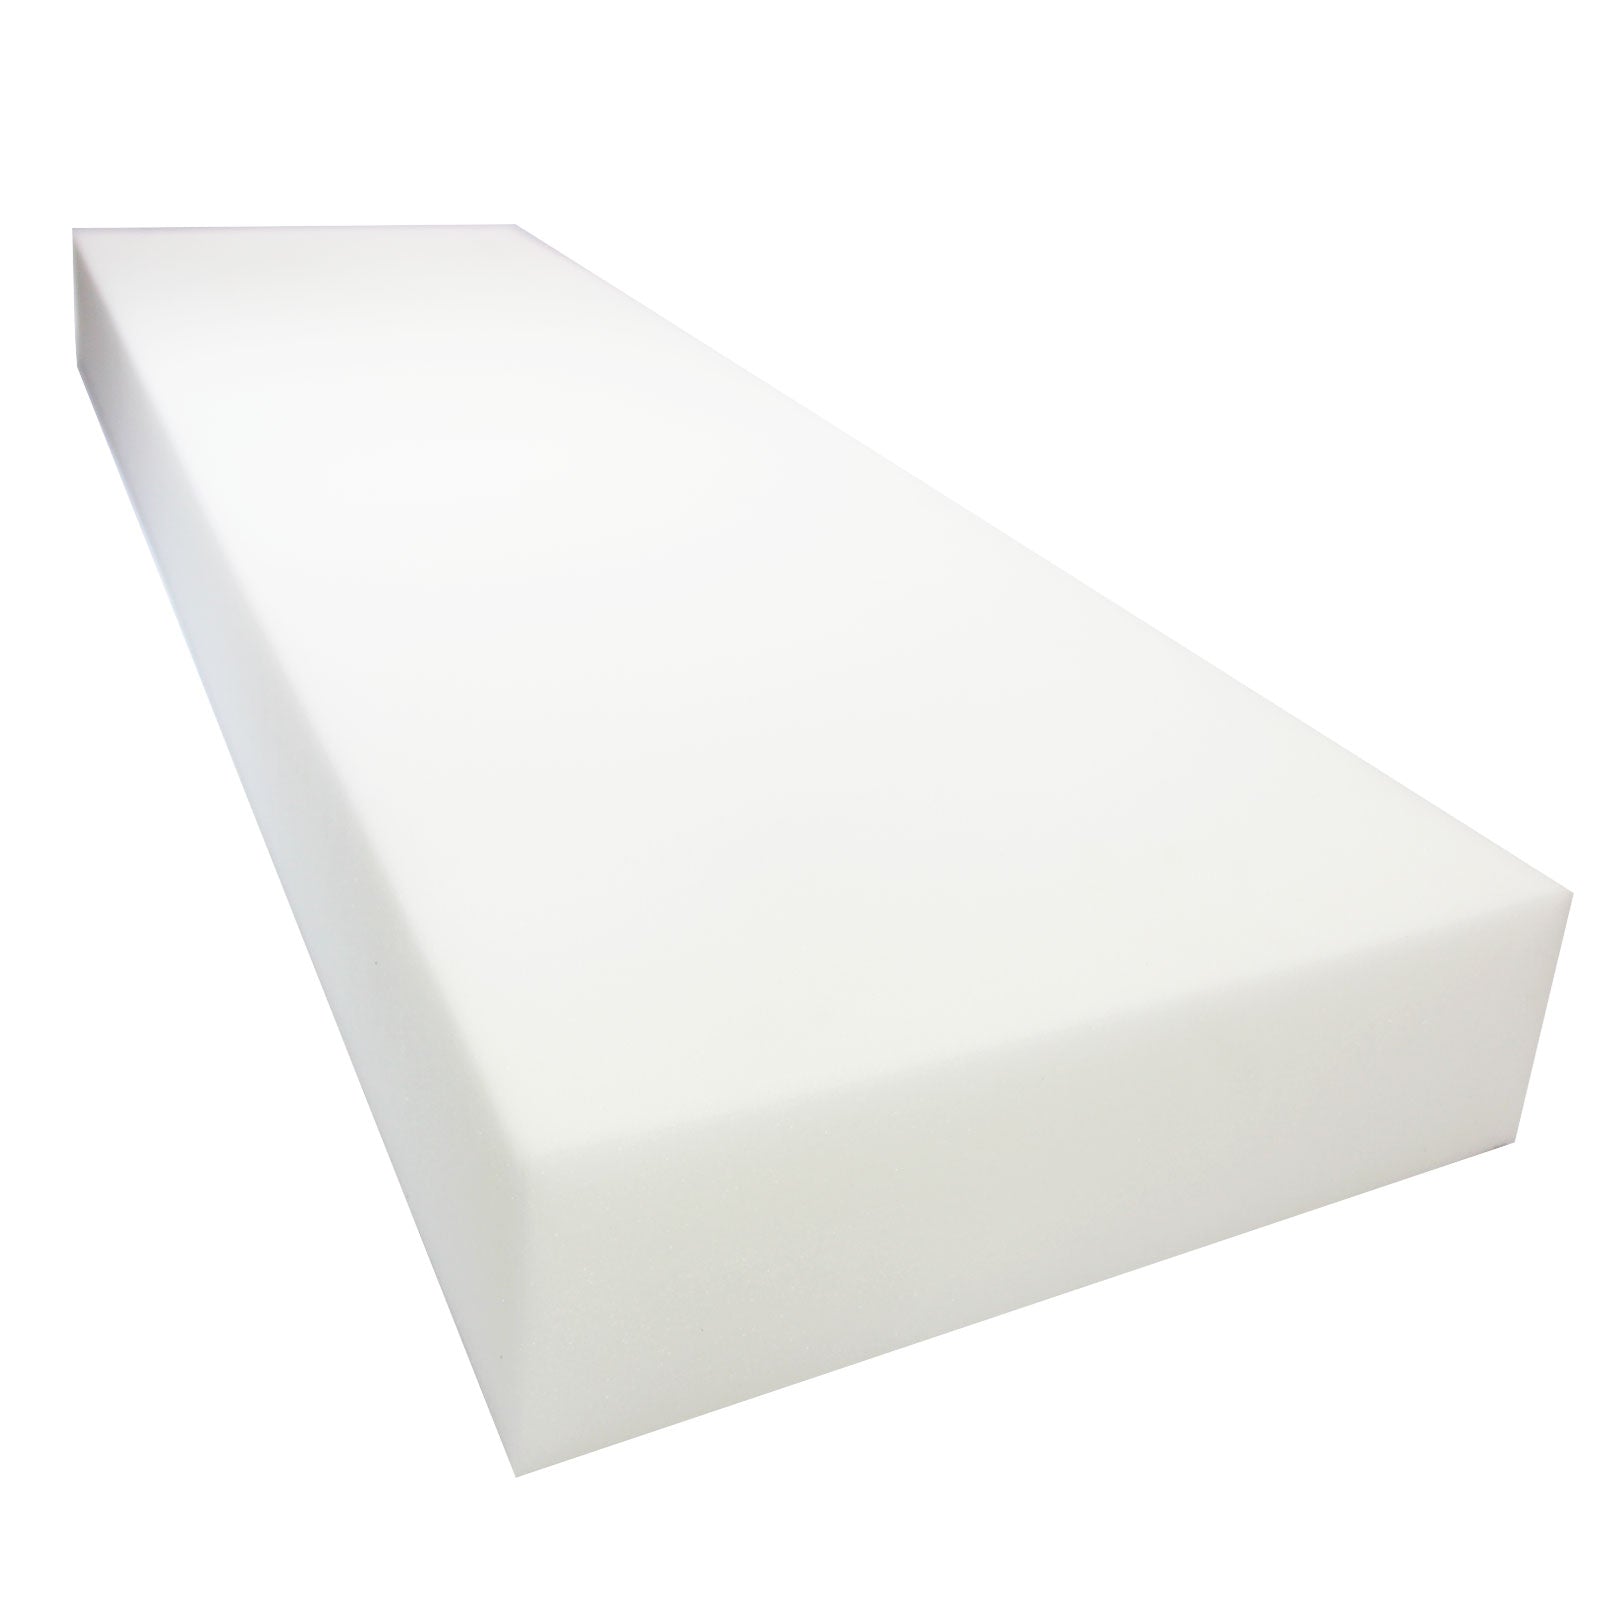 Milliard Upholstery Foam, 3x24x72